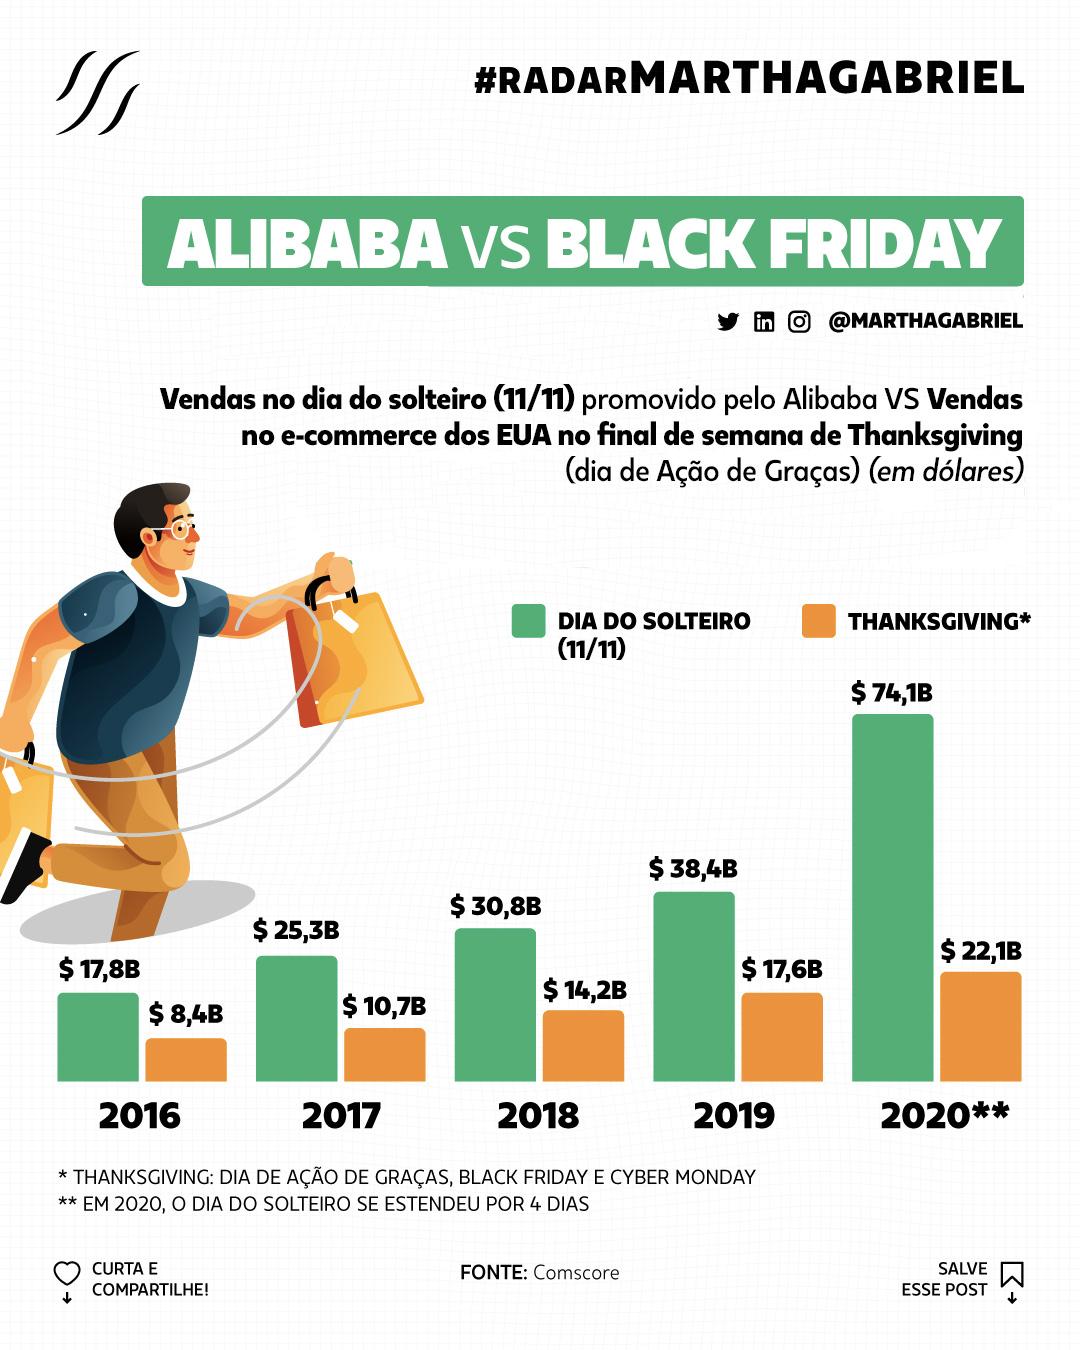 Alibaba VS Black Friday